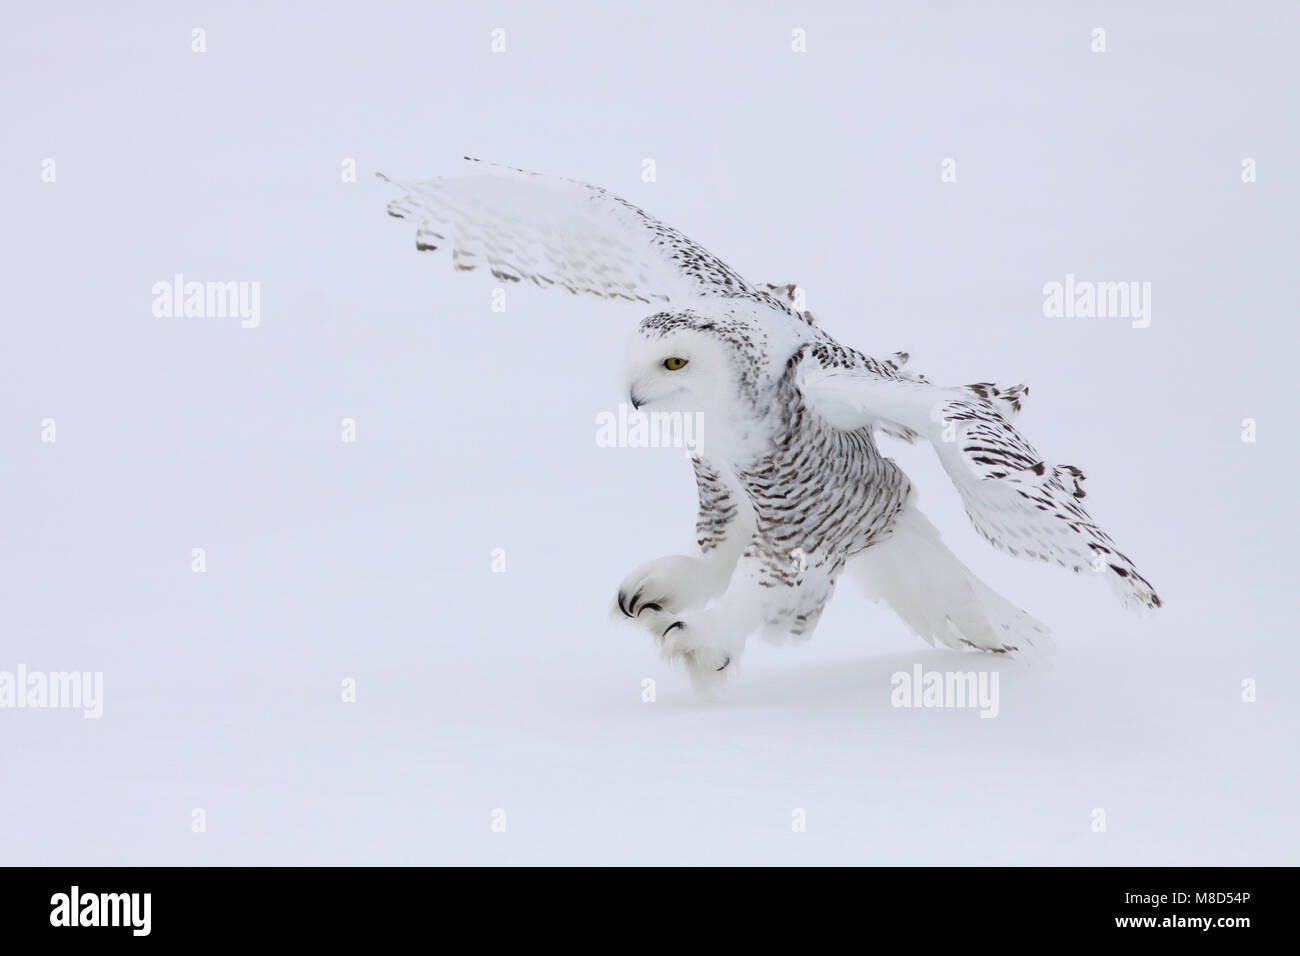 Sneeuwuil landend op sneeuw; Snowy Owl landing on snow Stock Photo - Alamy